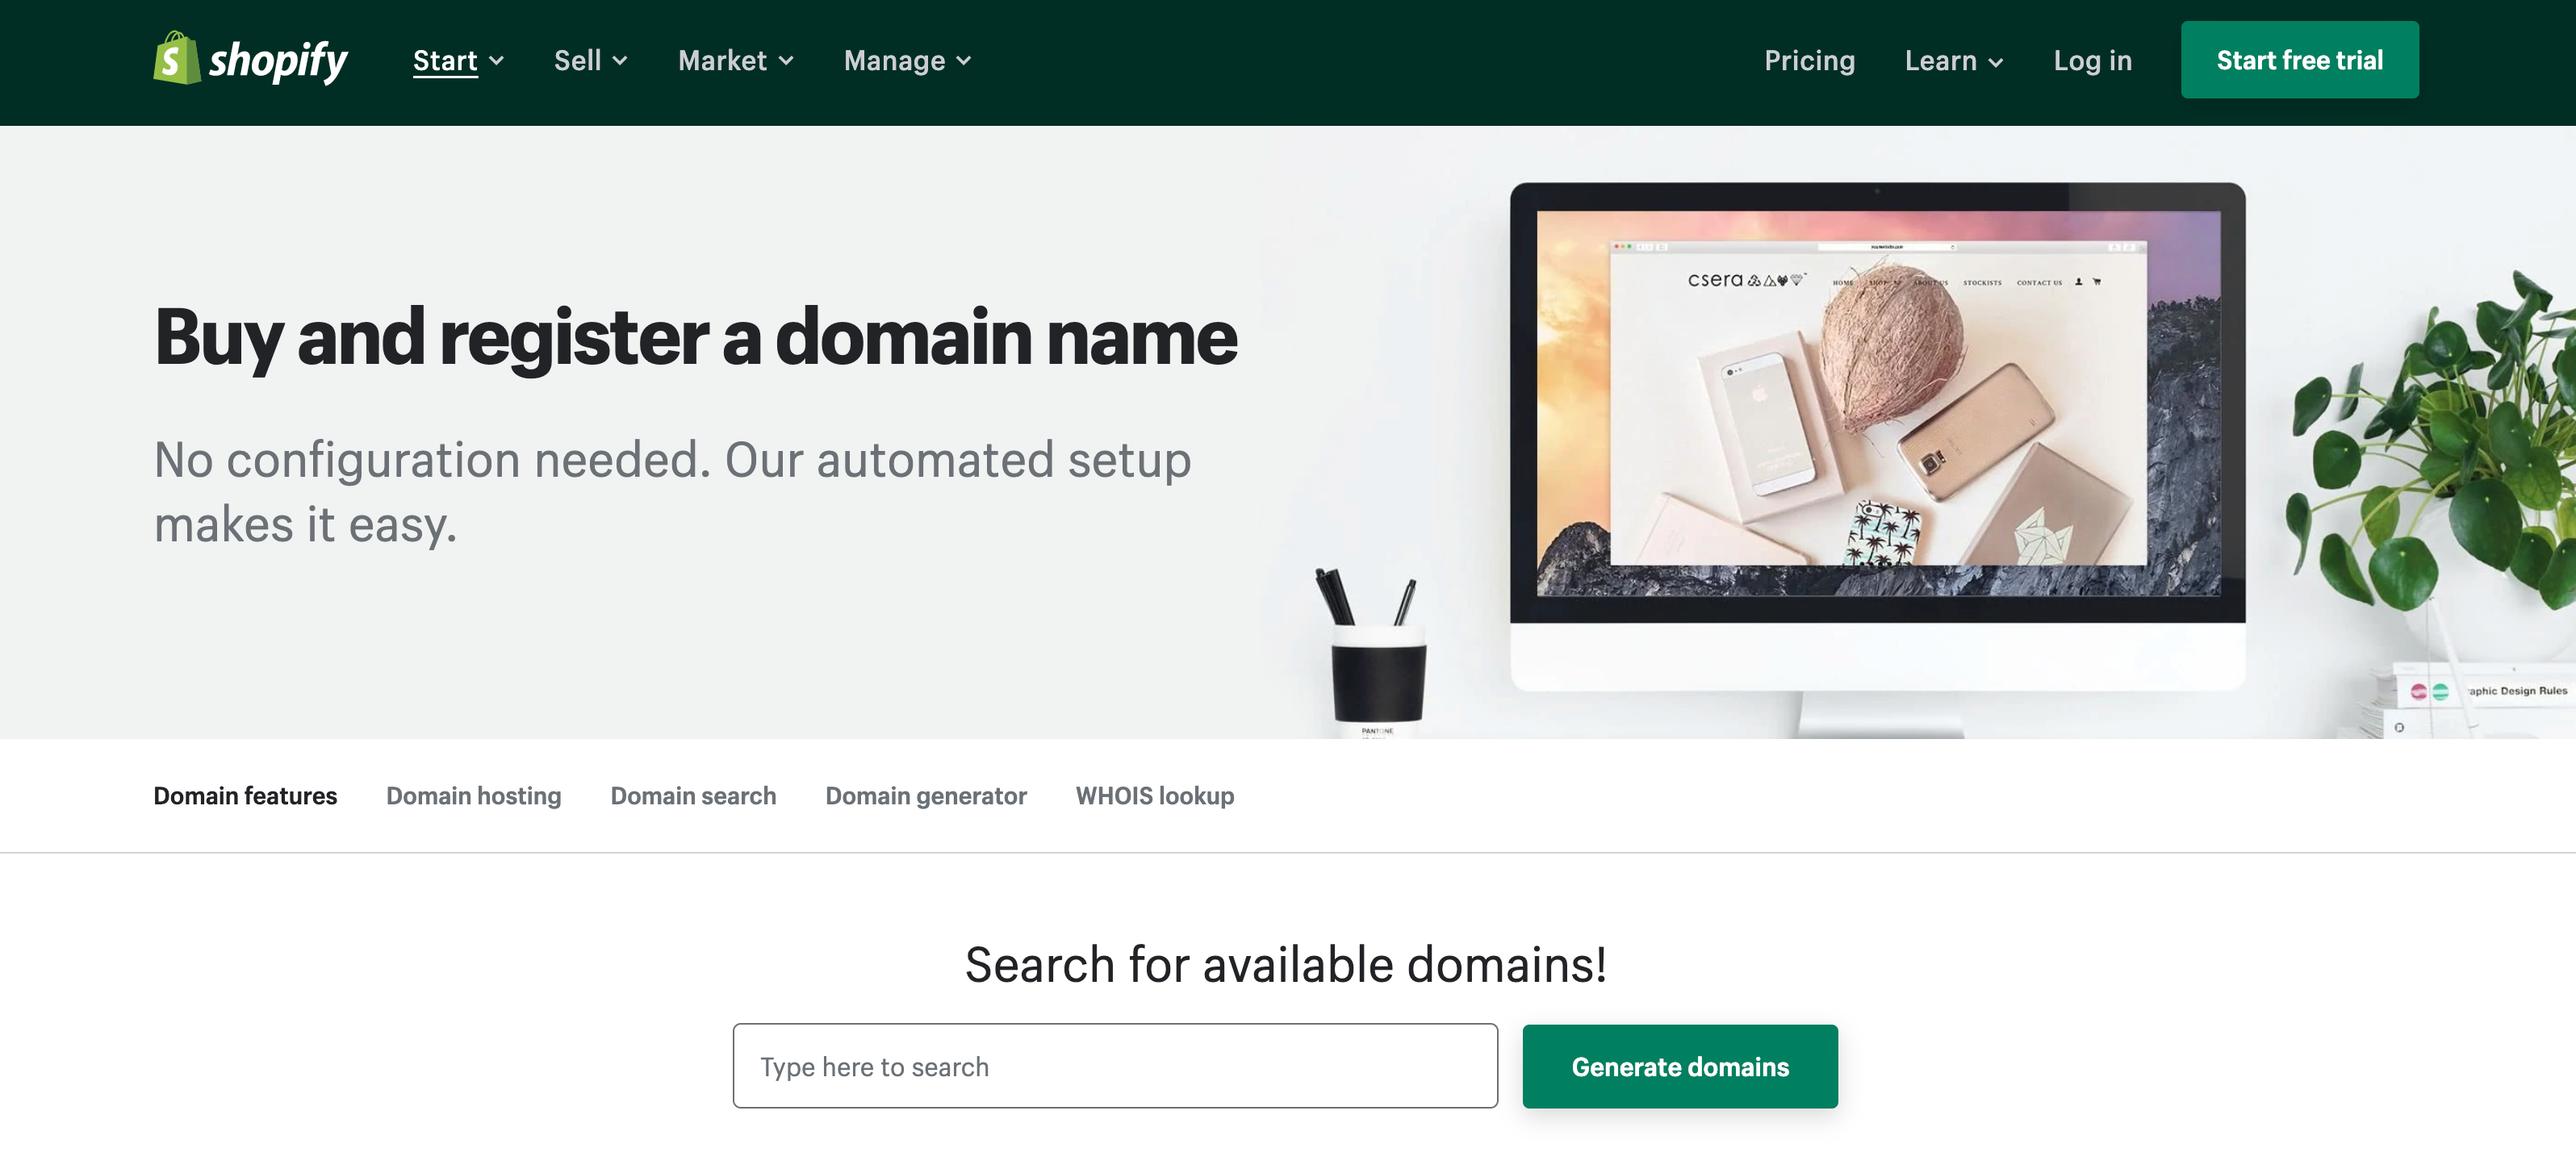 Best domain naming tool: Shopify domain generator